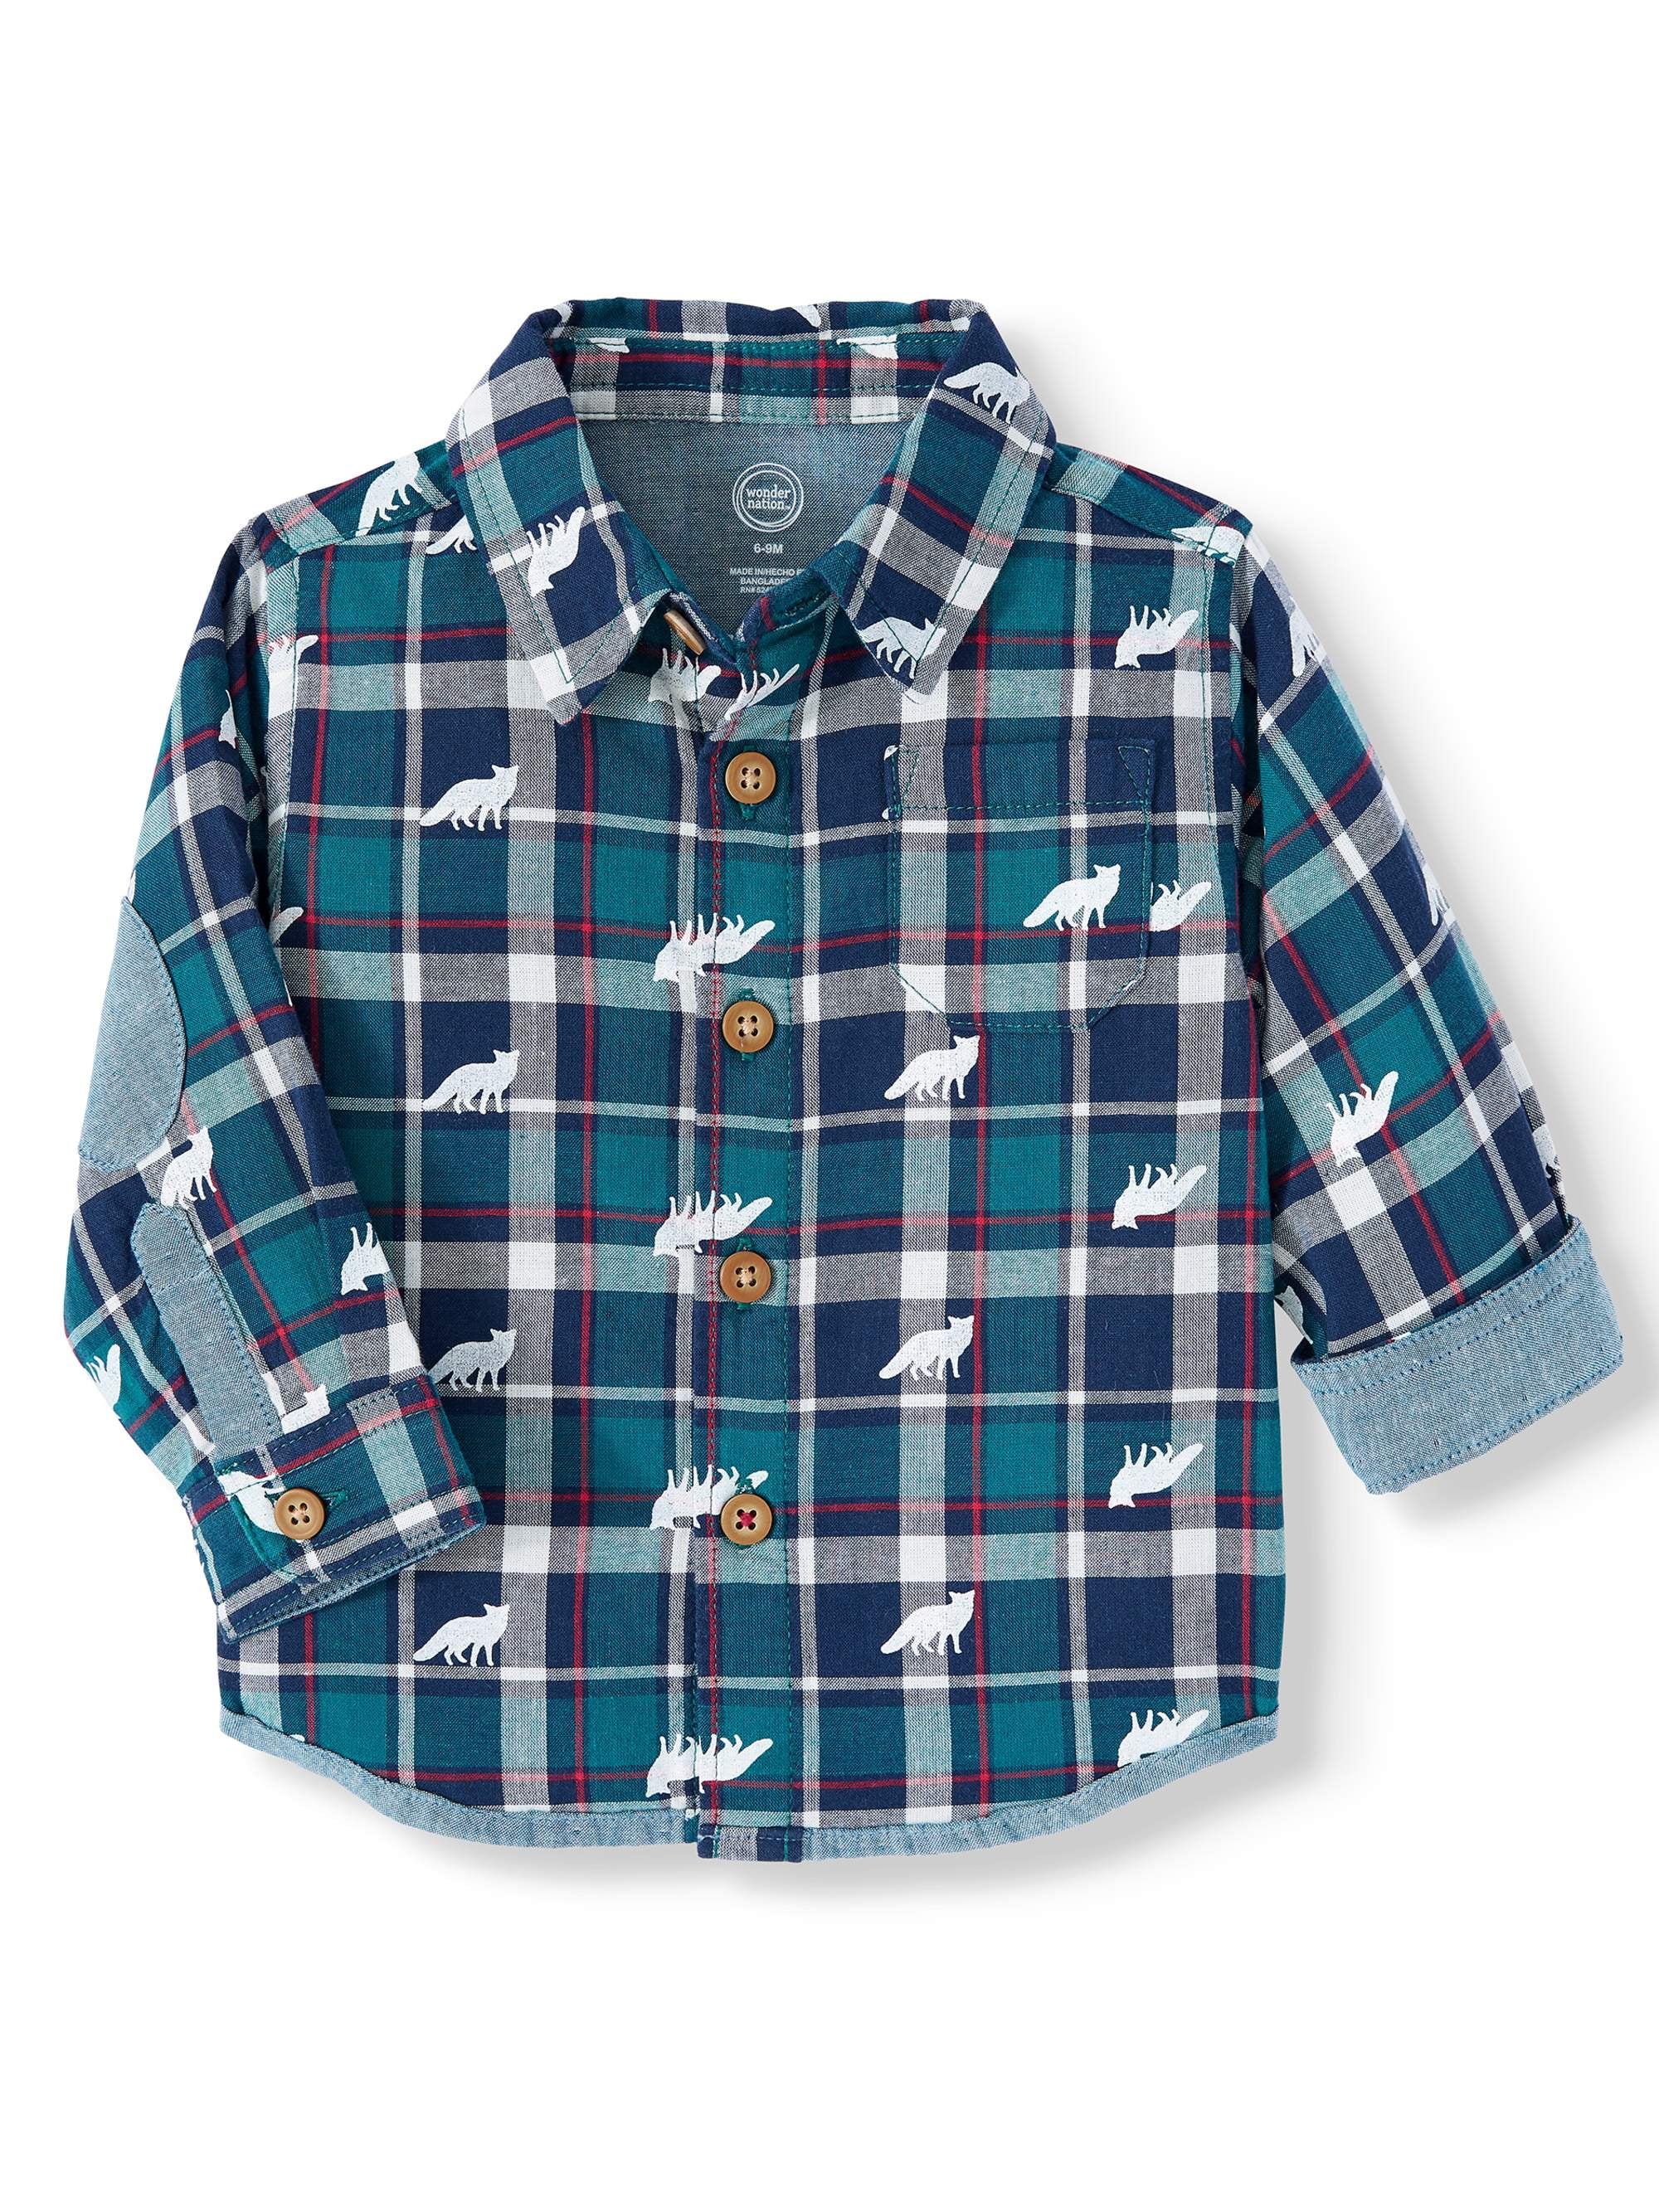 Kids Long Sleeve Boys Plaid Flannel Button Down Shirt 2T-12